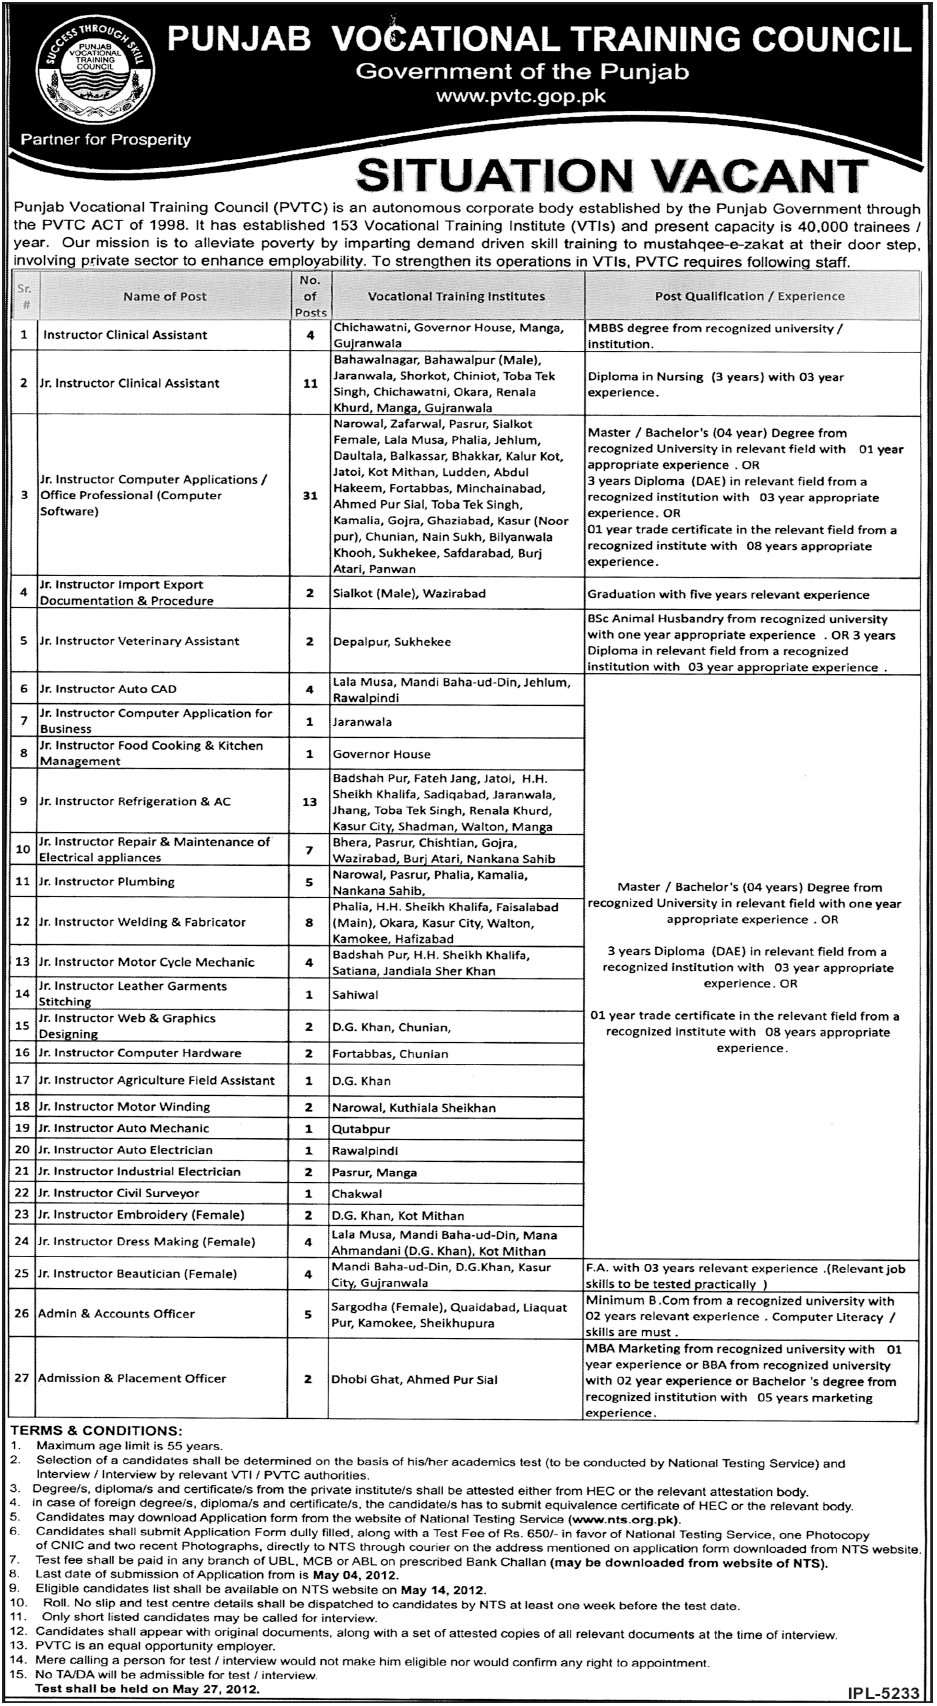 Punjab Vocational Training Council, Government of the Punjab Jobs